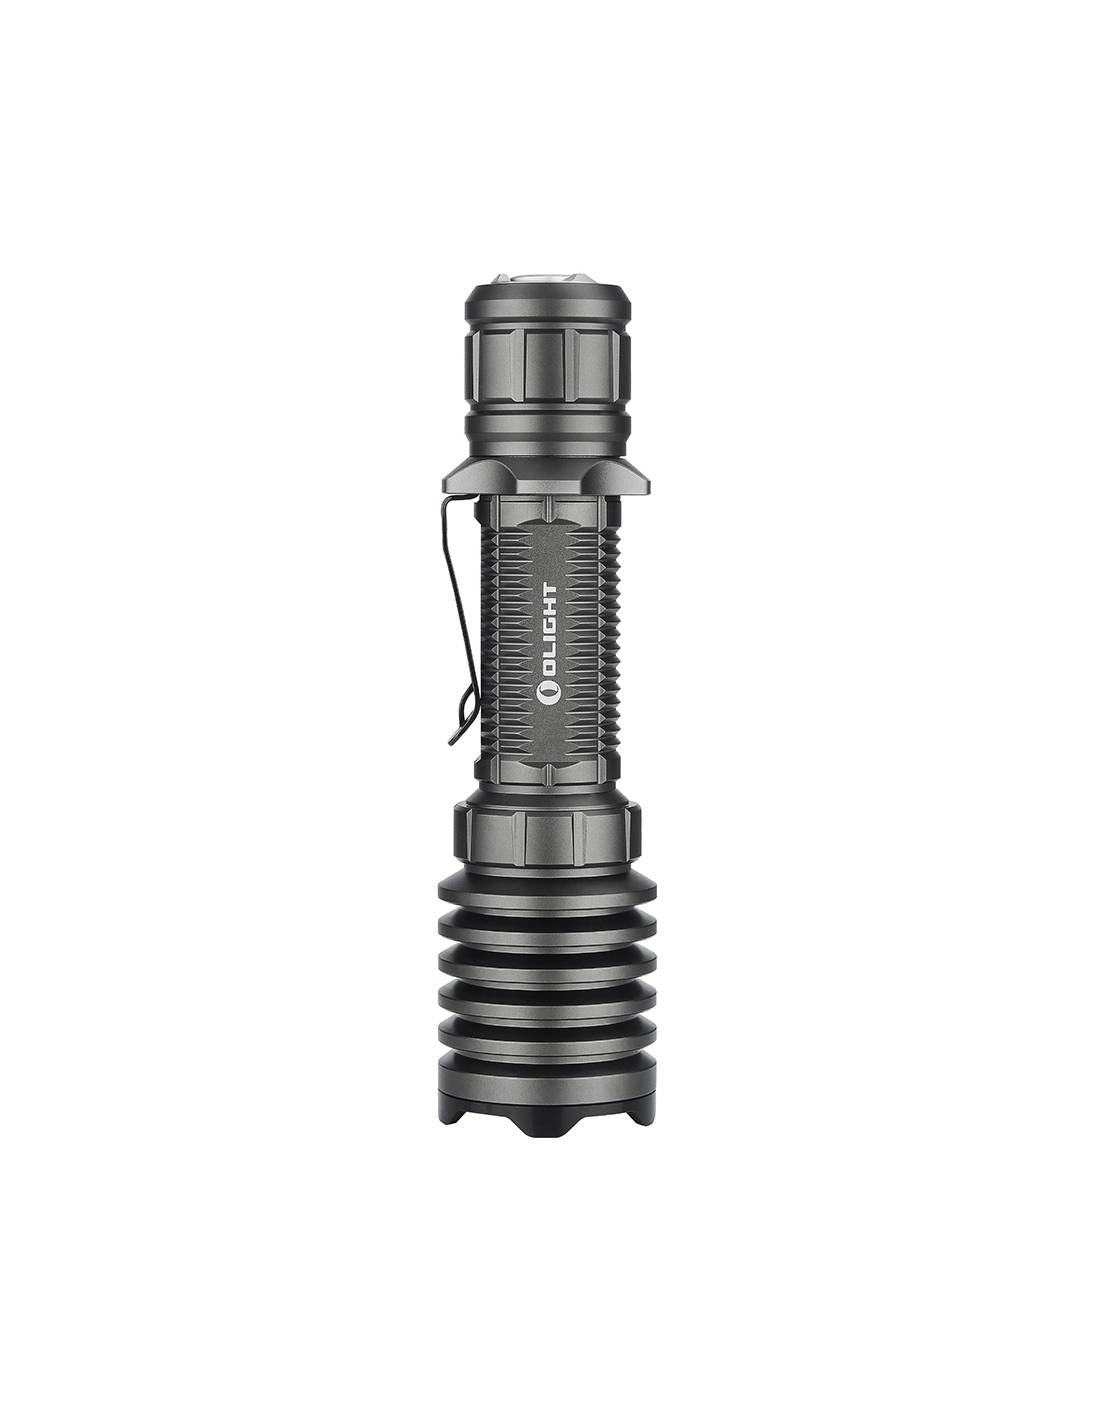 Warrior X Pro 2250 lum flashlight 